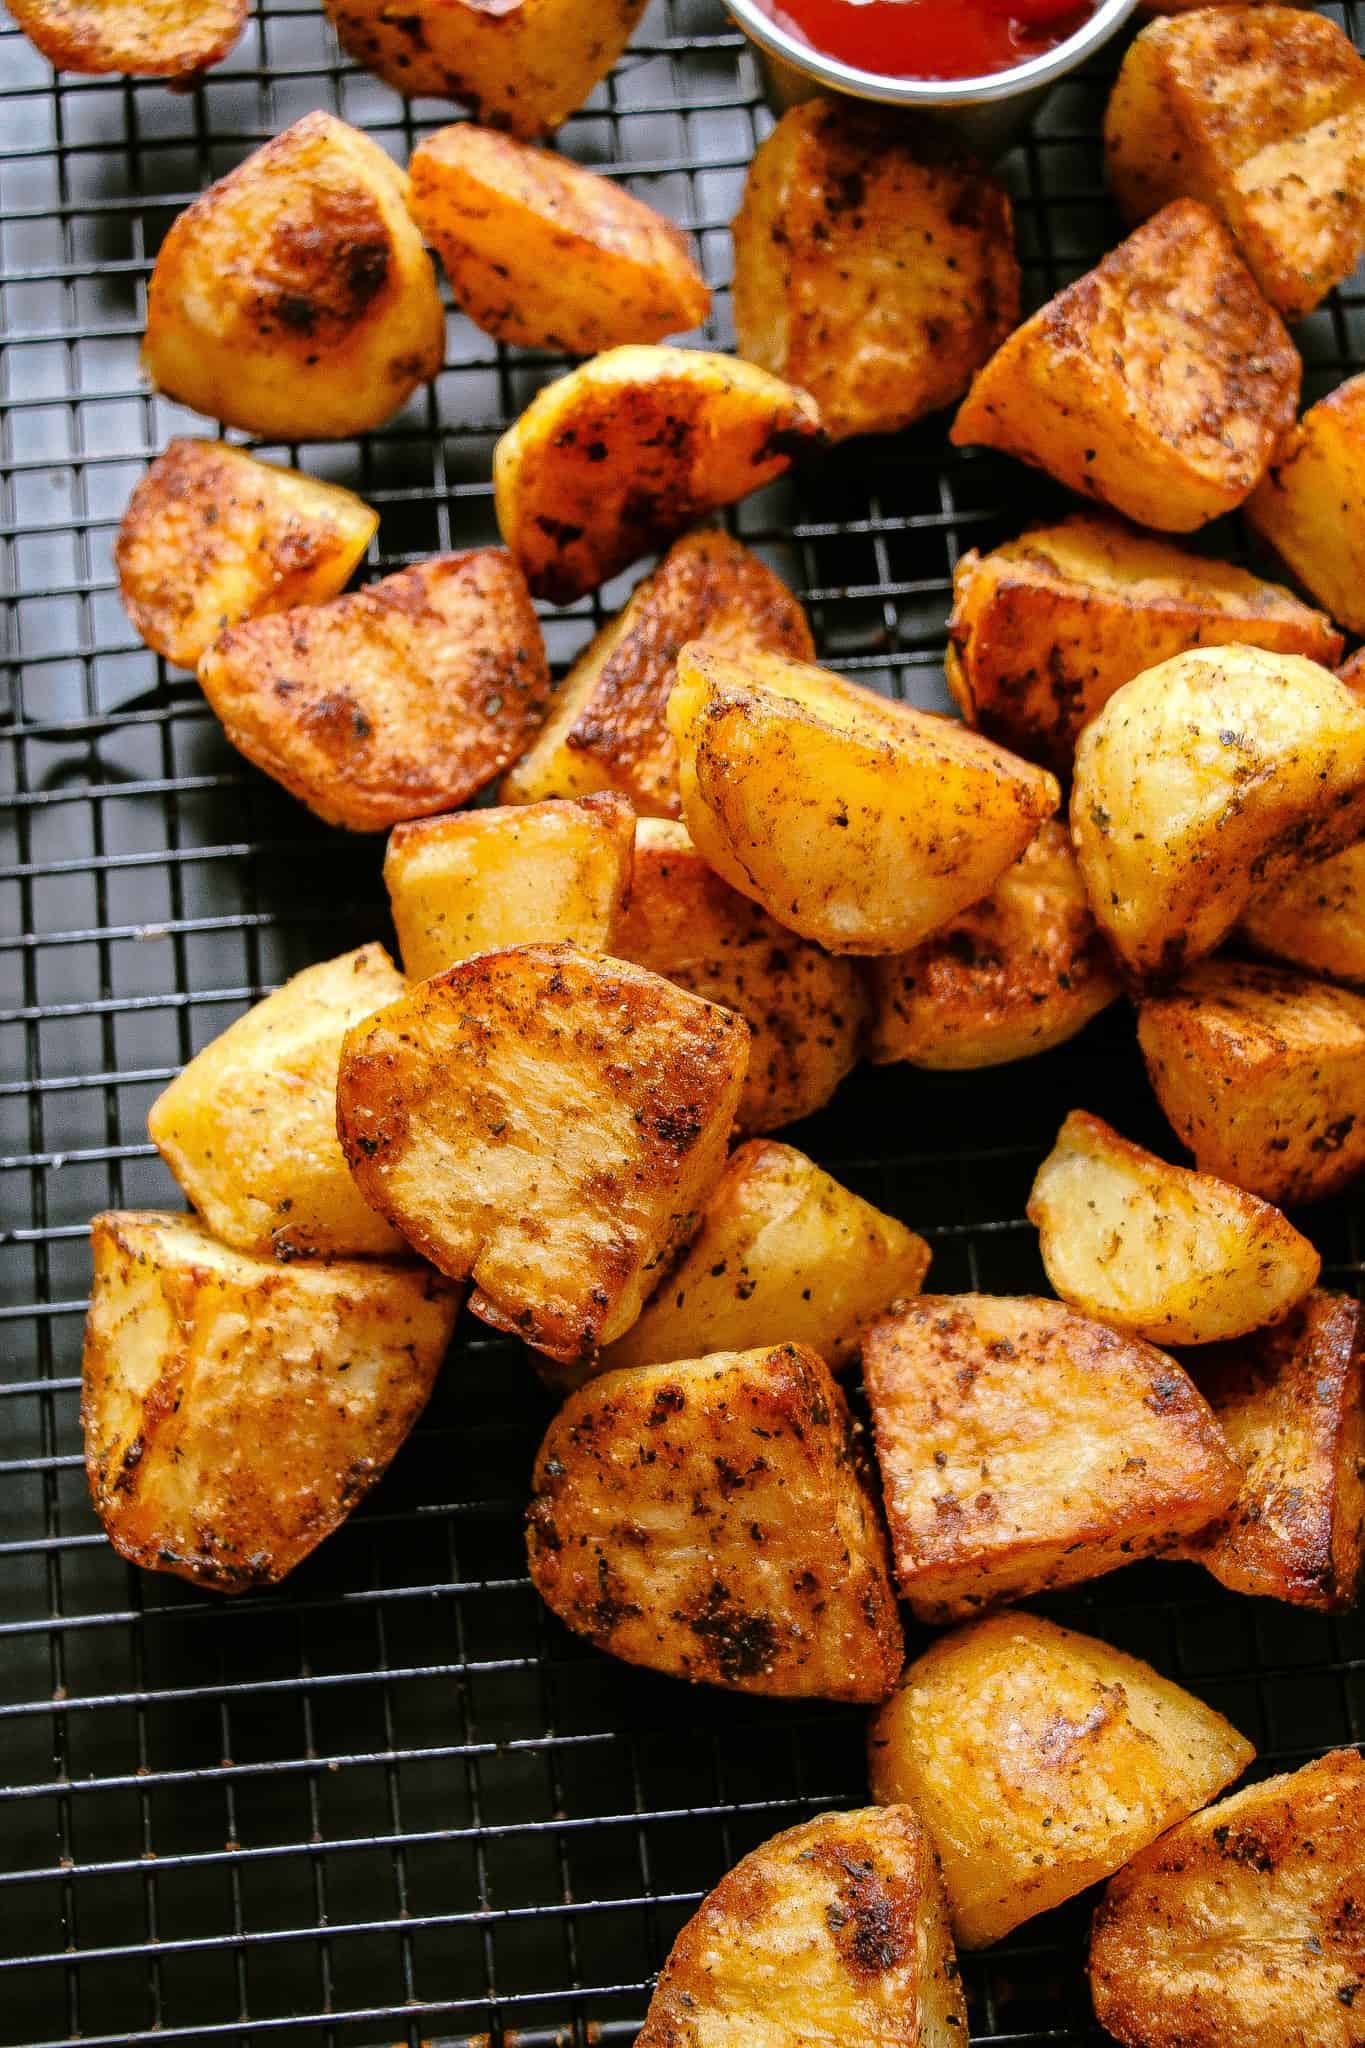 Extra Crispy Oven-Roasted Potatoes